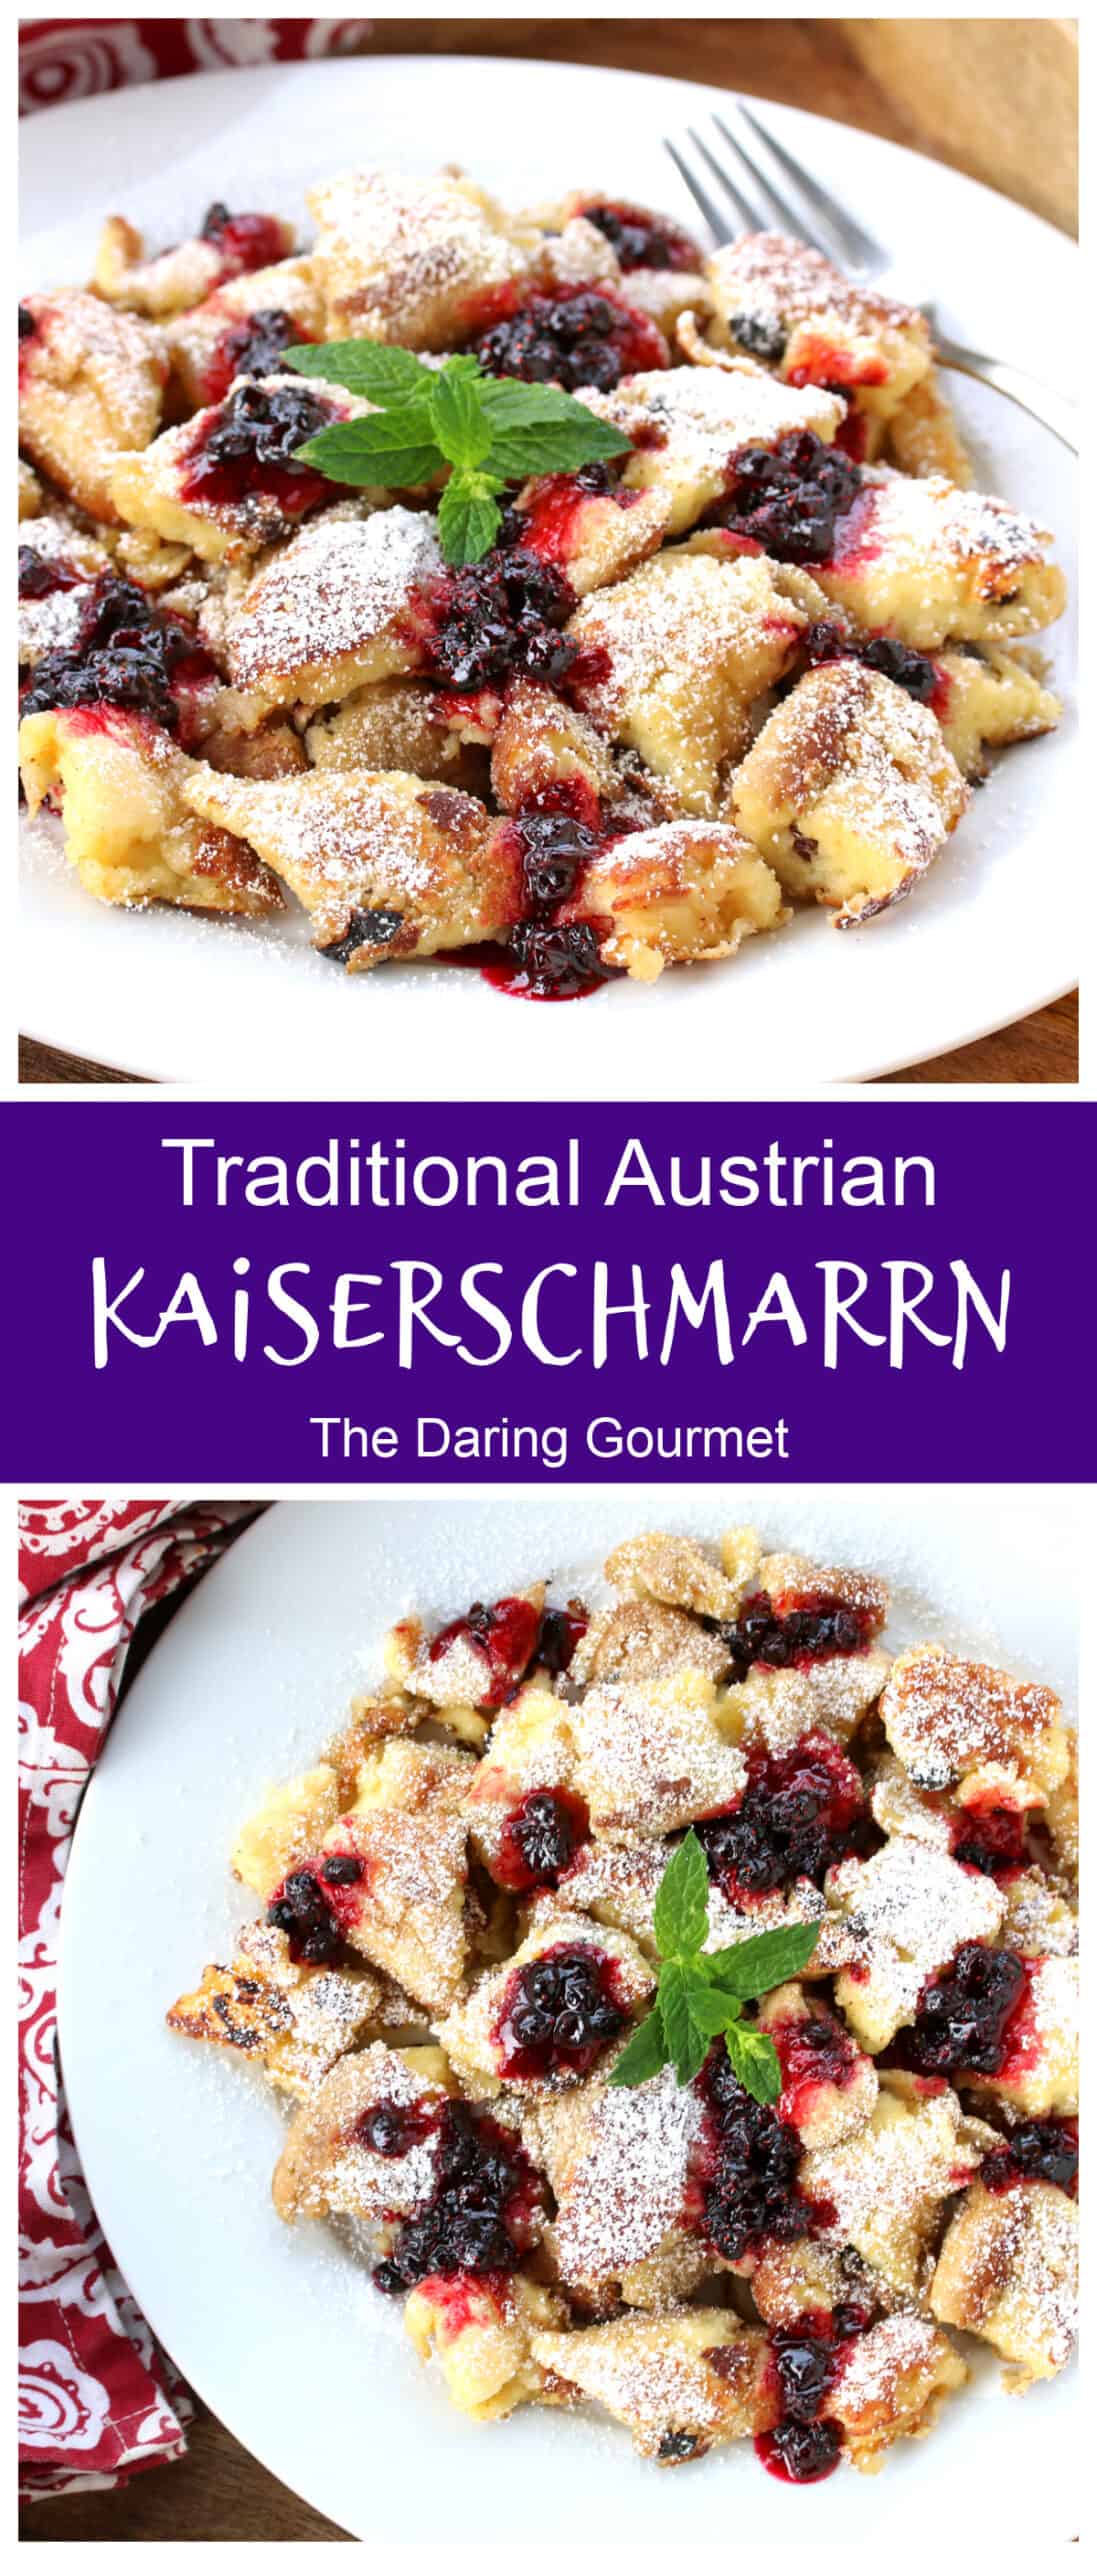 kaiserschmarrn recipe authentic traditional Austrian torn pancakes shredded scrambled rum raisins berries jam compote applesauce plums powdered sugar